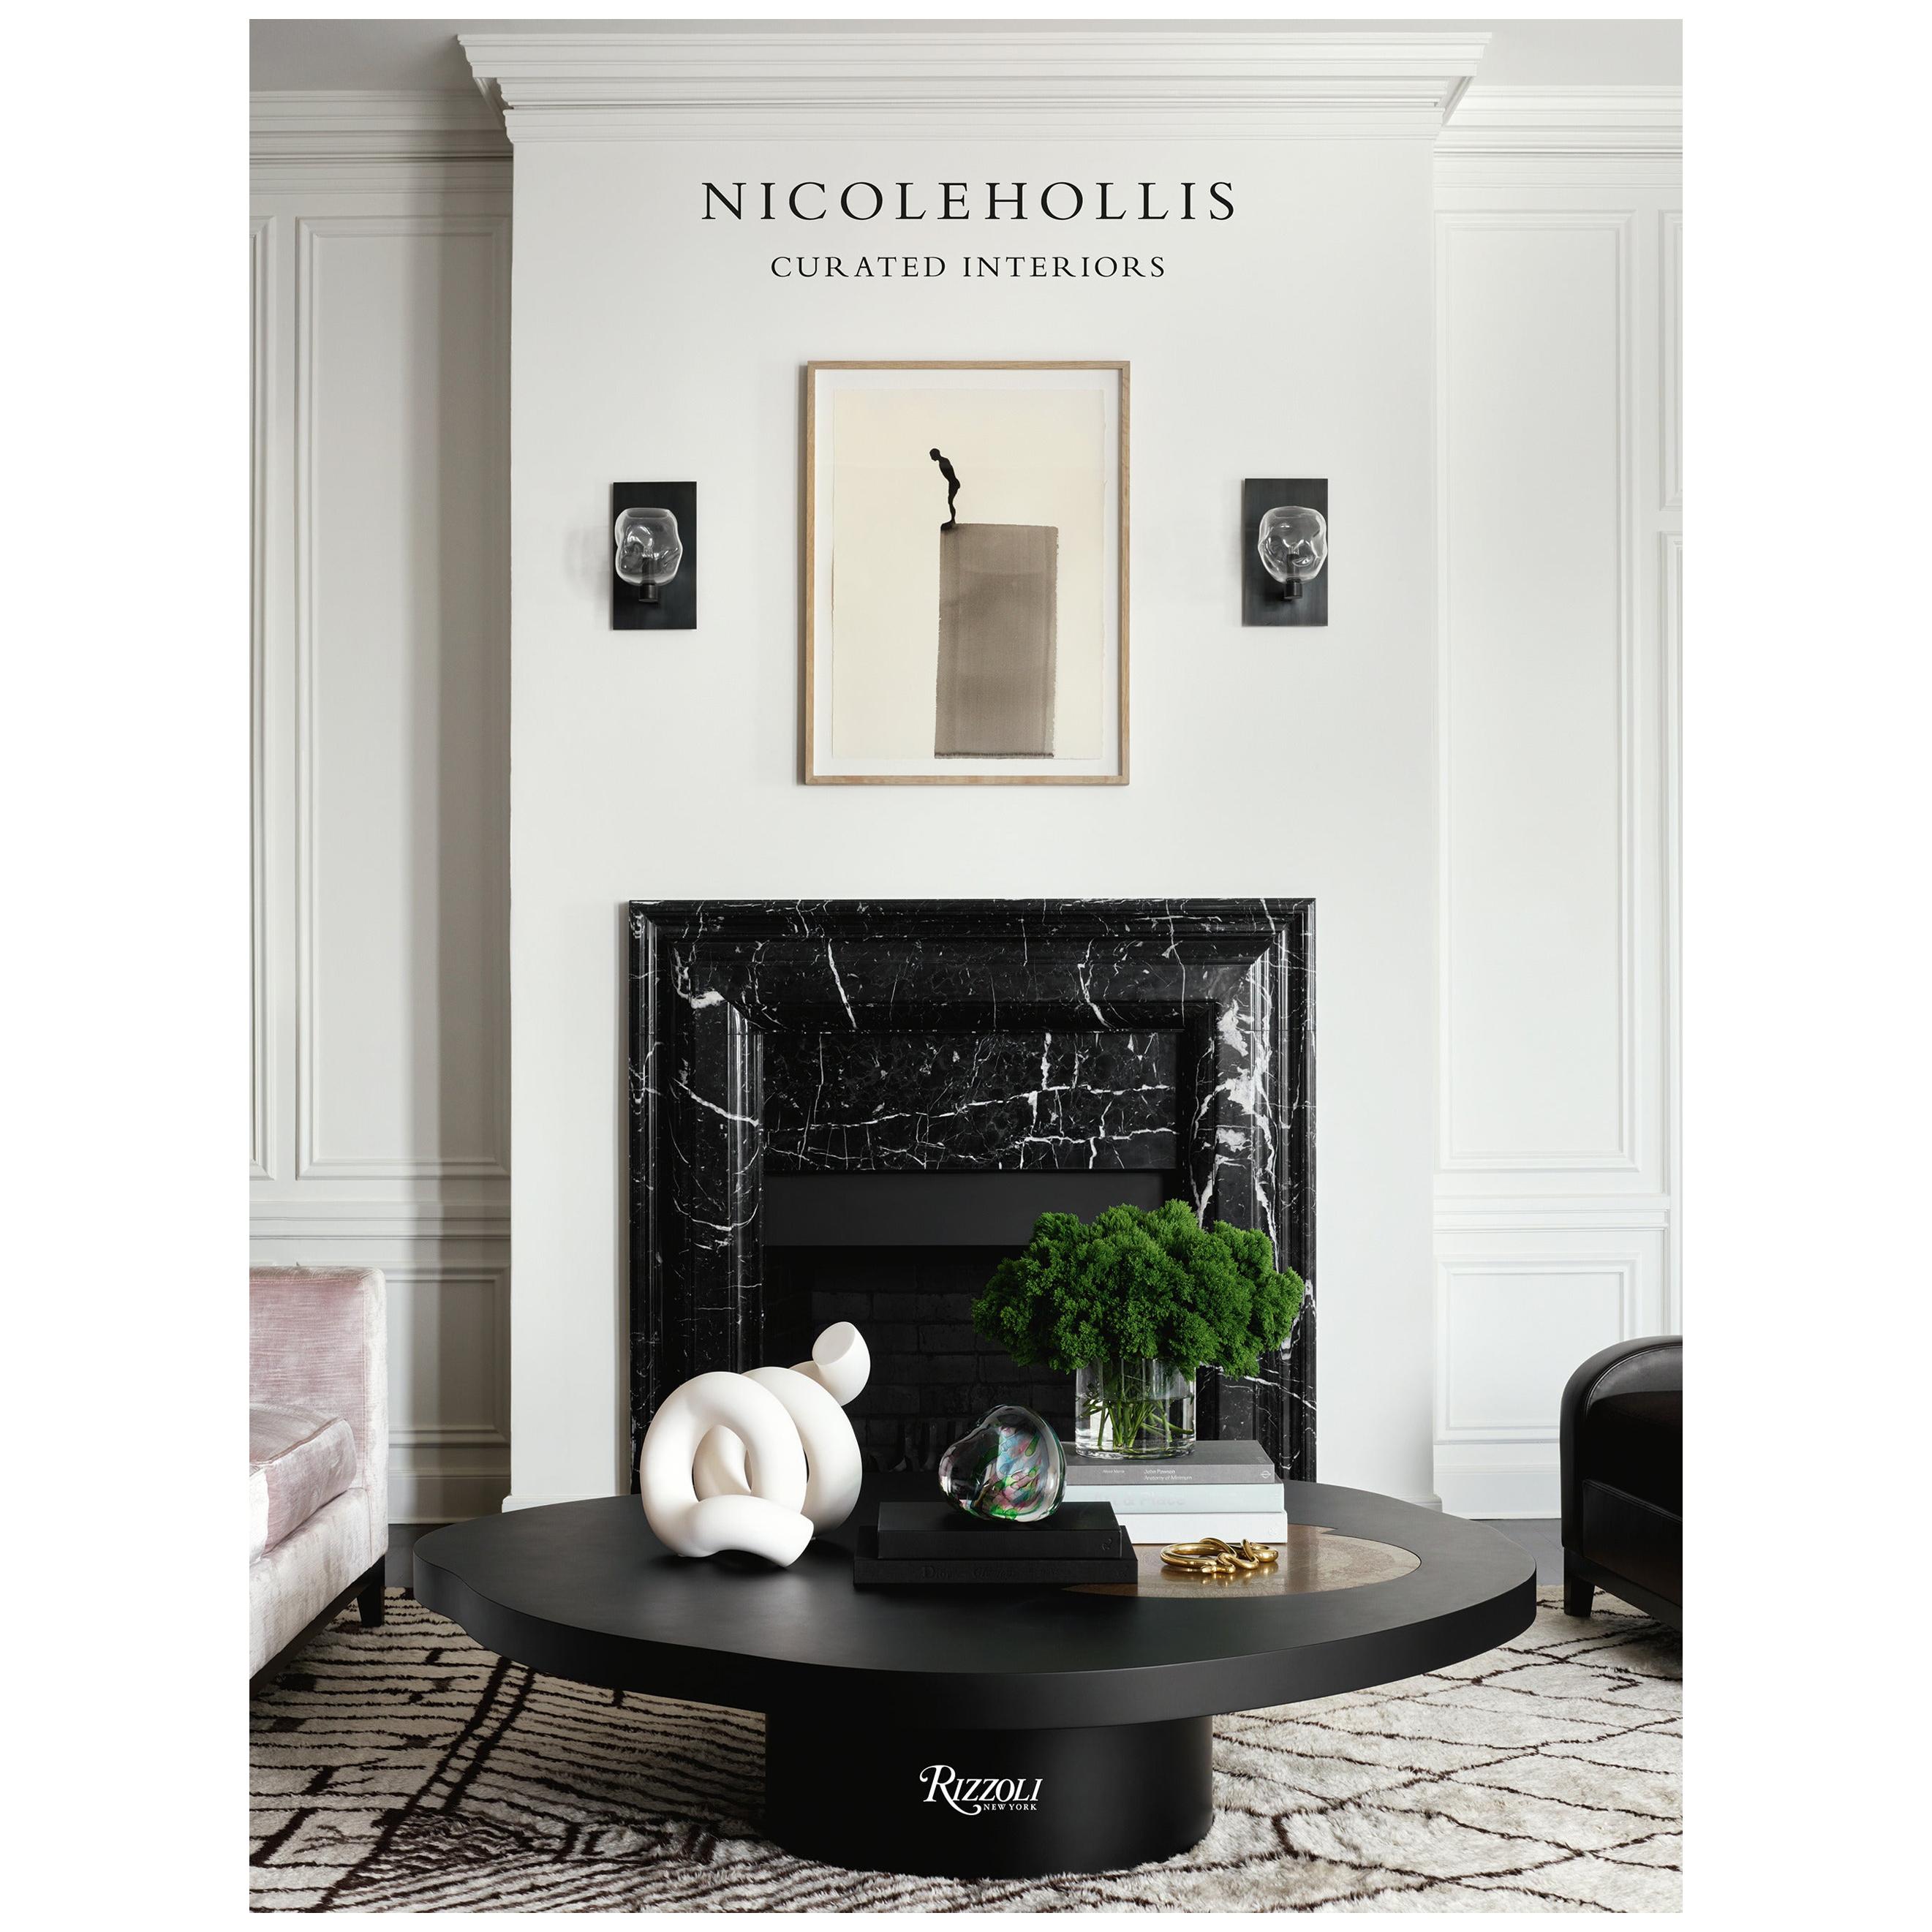 Nicolehollis: Curated Interiors